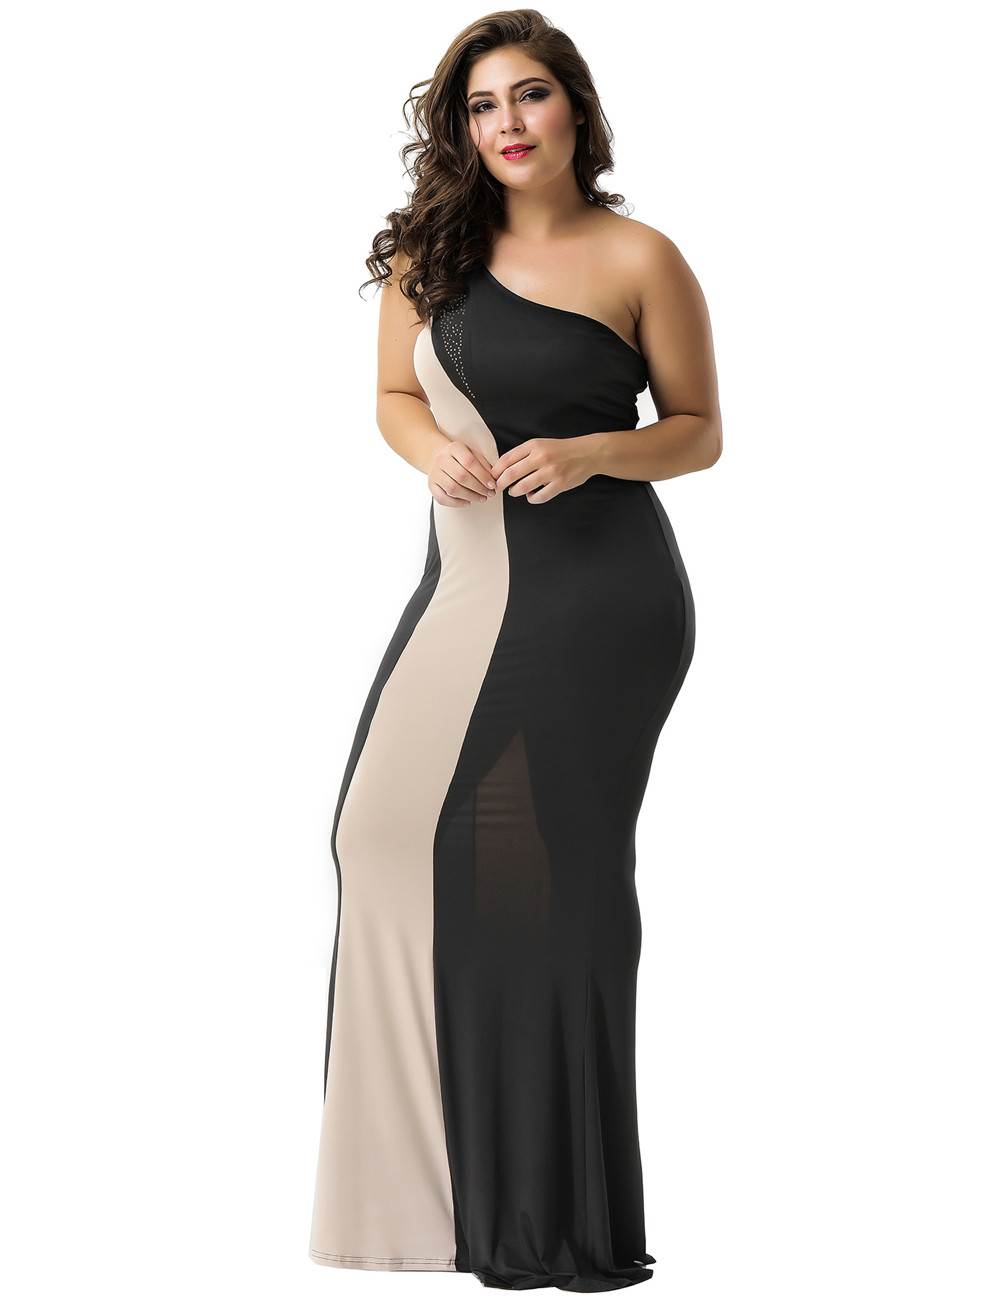 Stylish Wholesale Black And Nude One Shoulder Maxi Dress